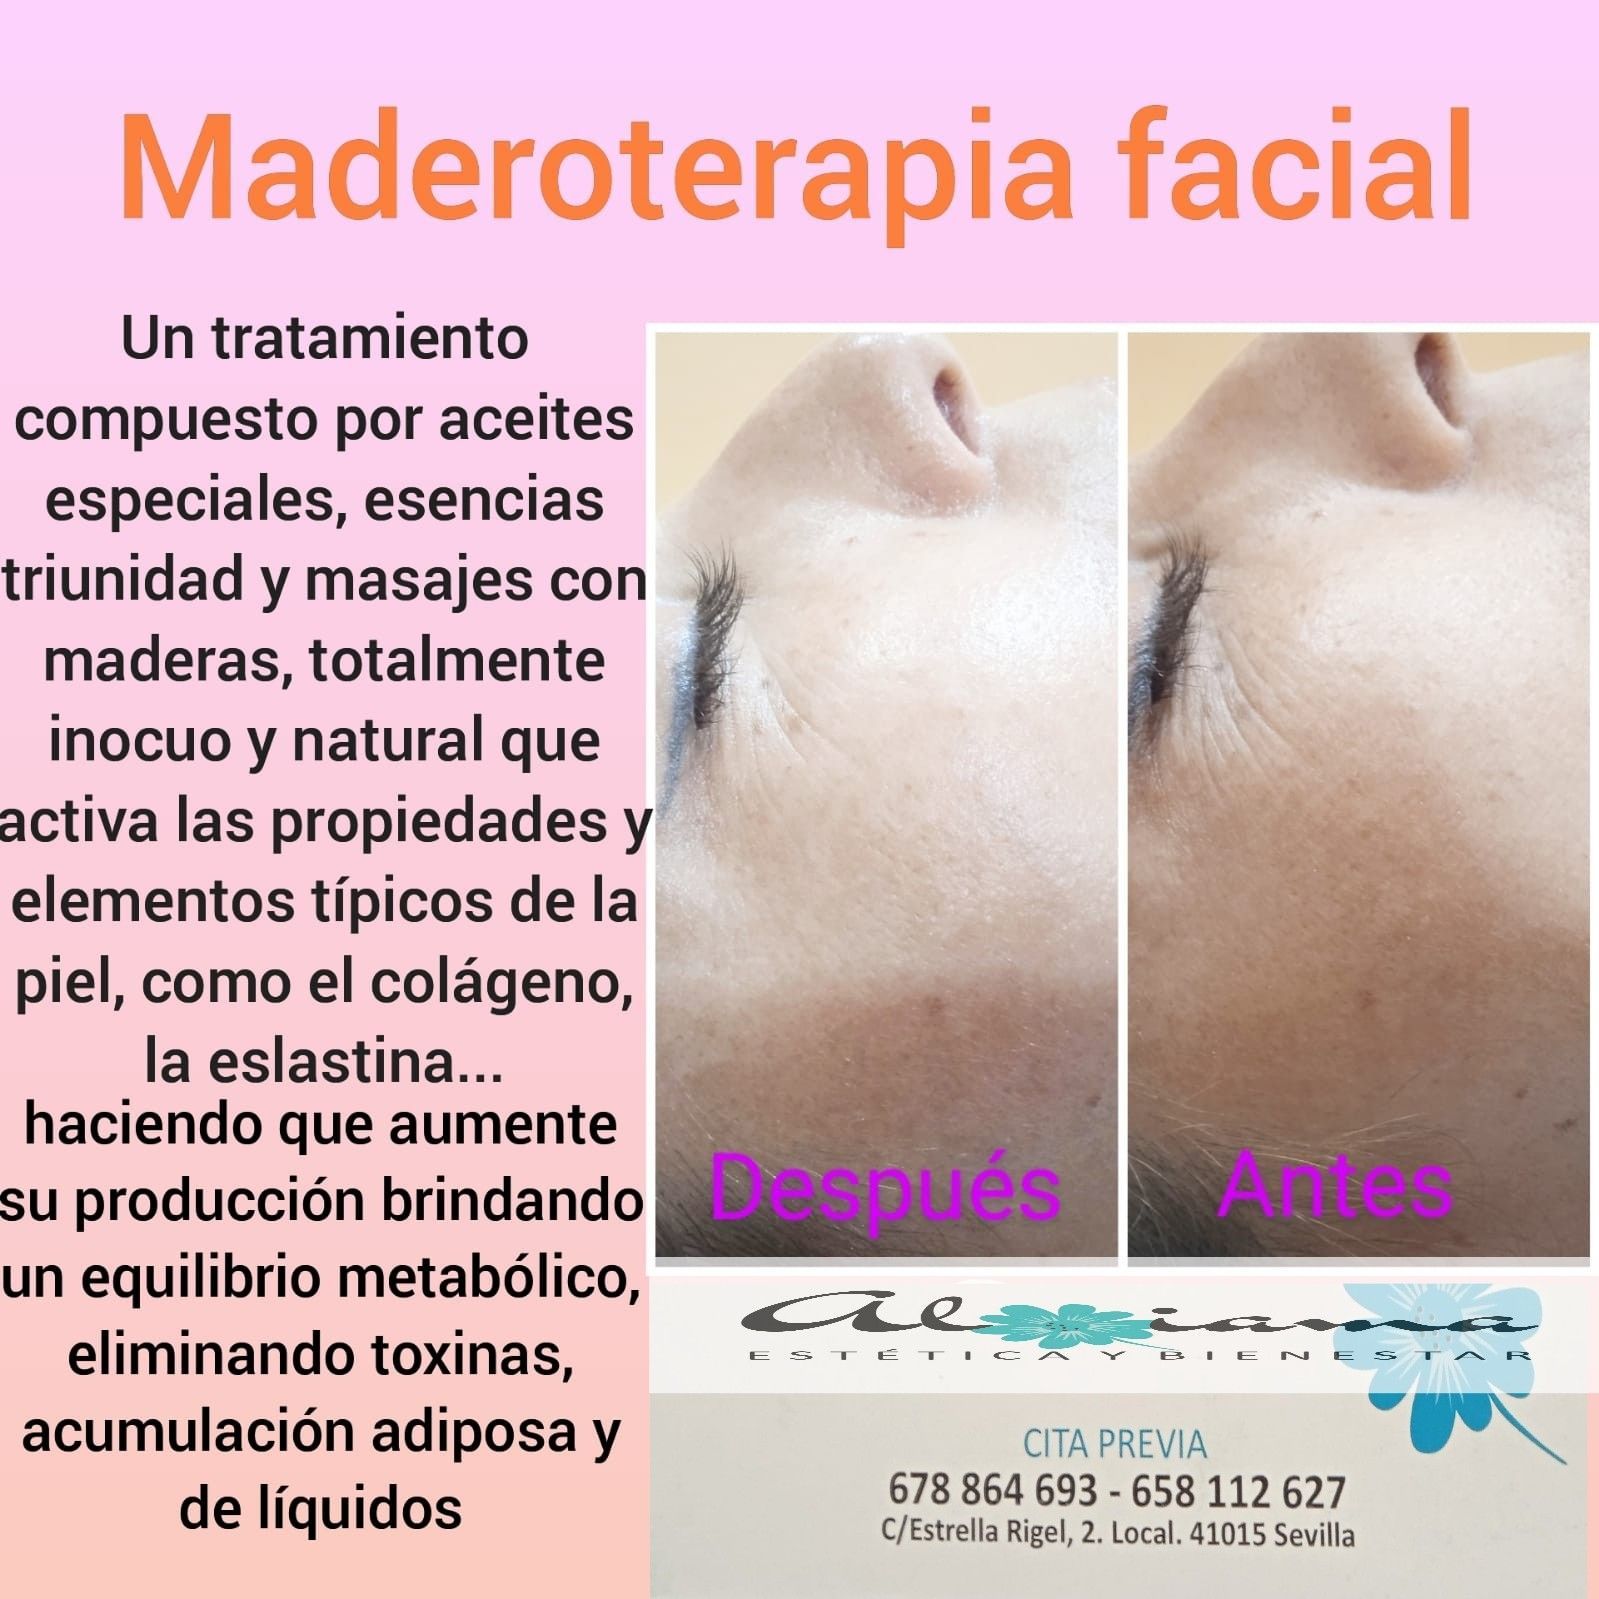 Maderoterapia facial portfolio